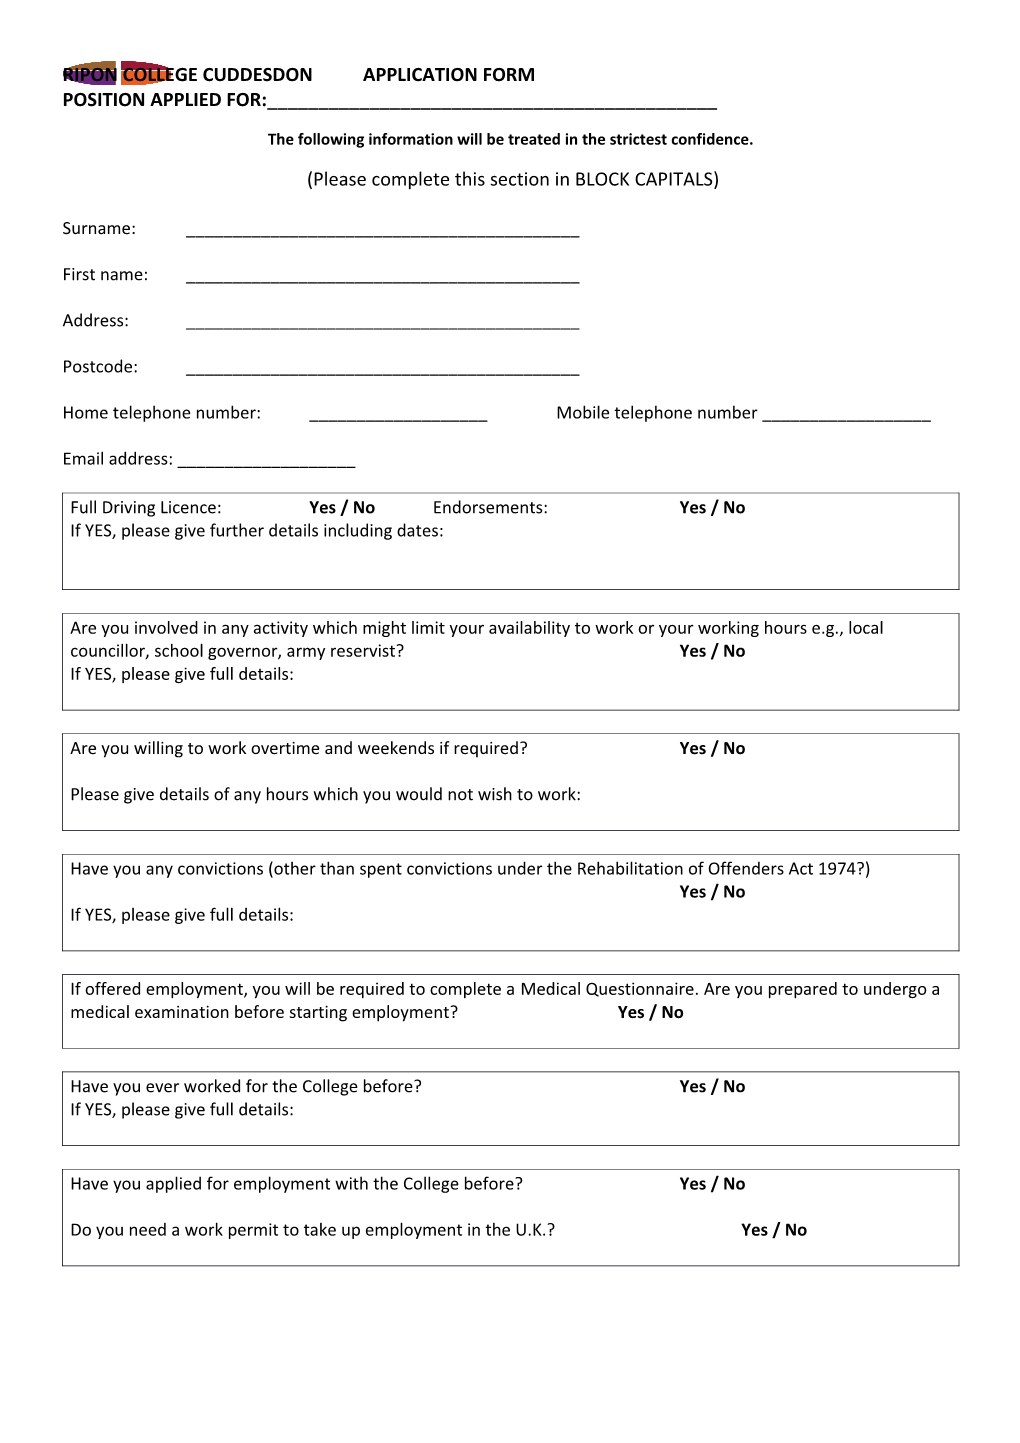 Ripon College Cuddesdon Application Form